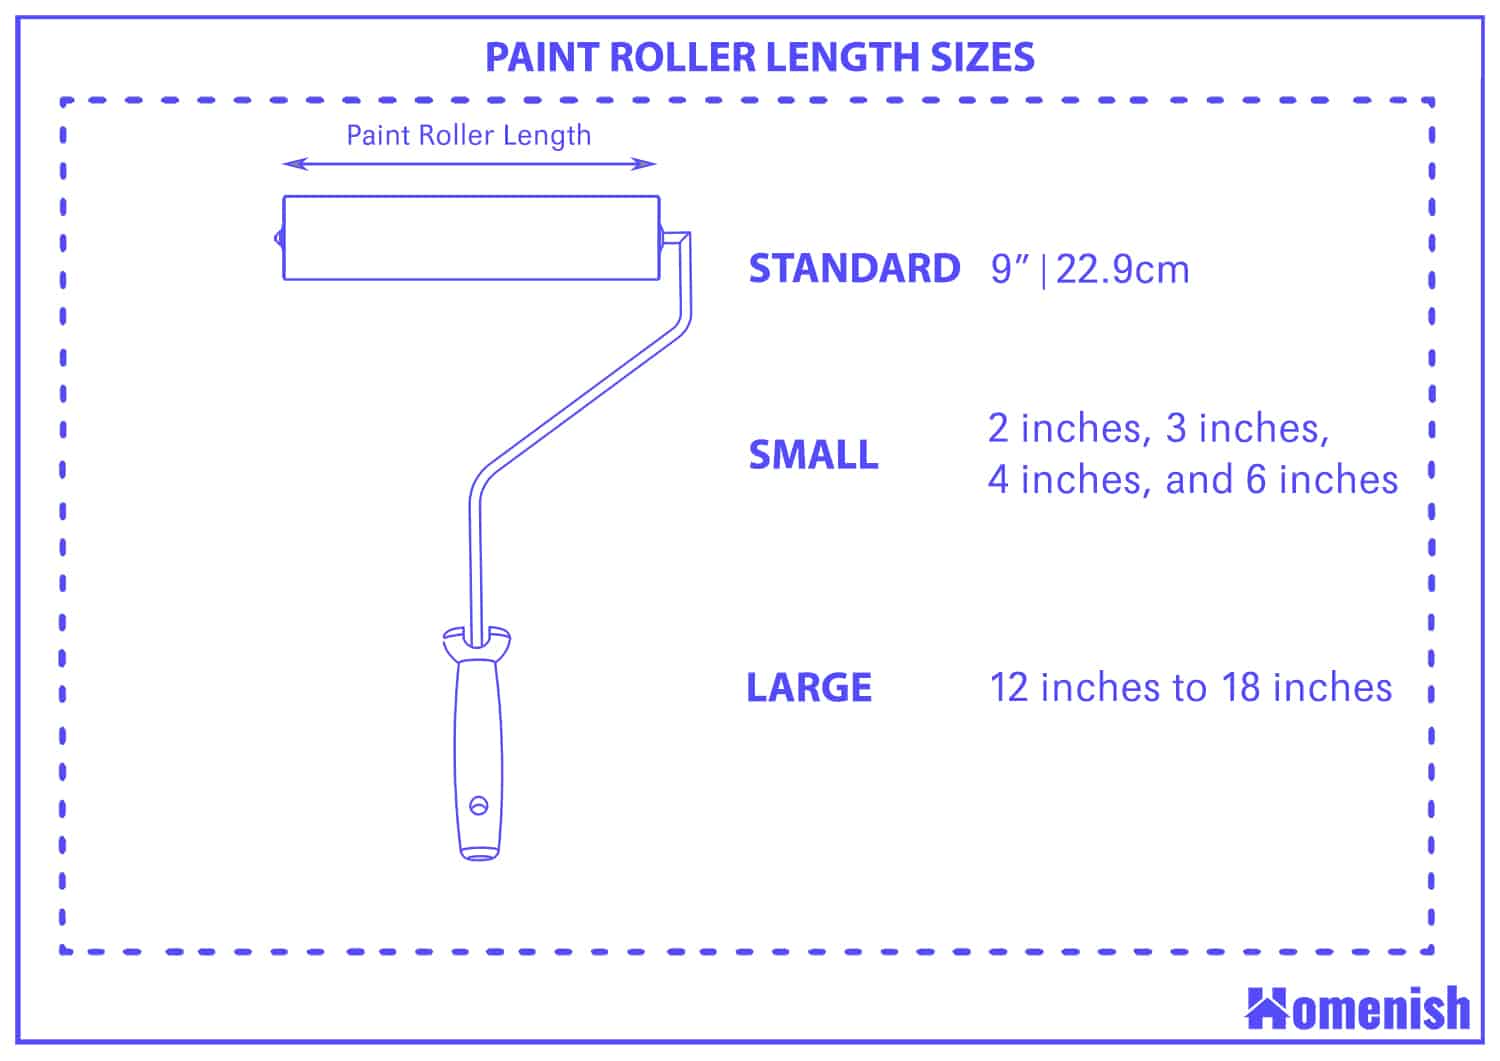 Paint roller length sizes